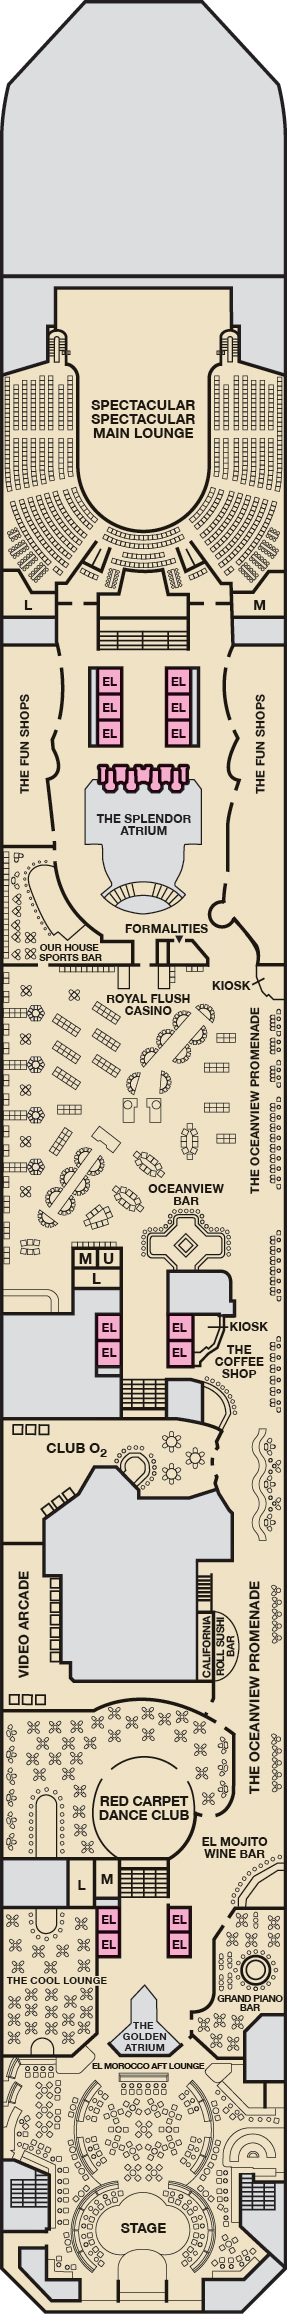 Promenade Deck Plan